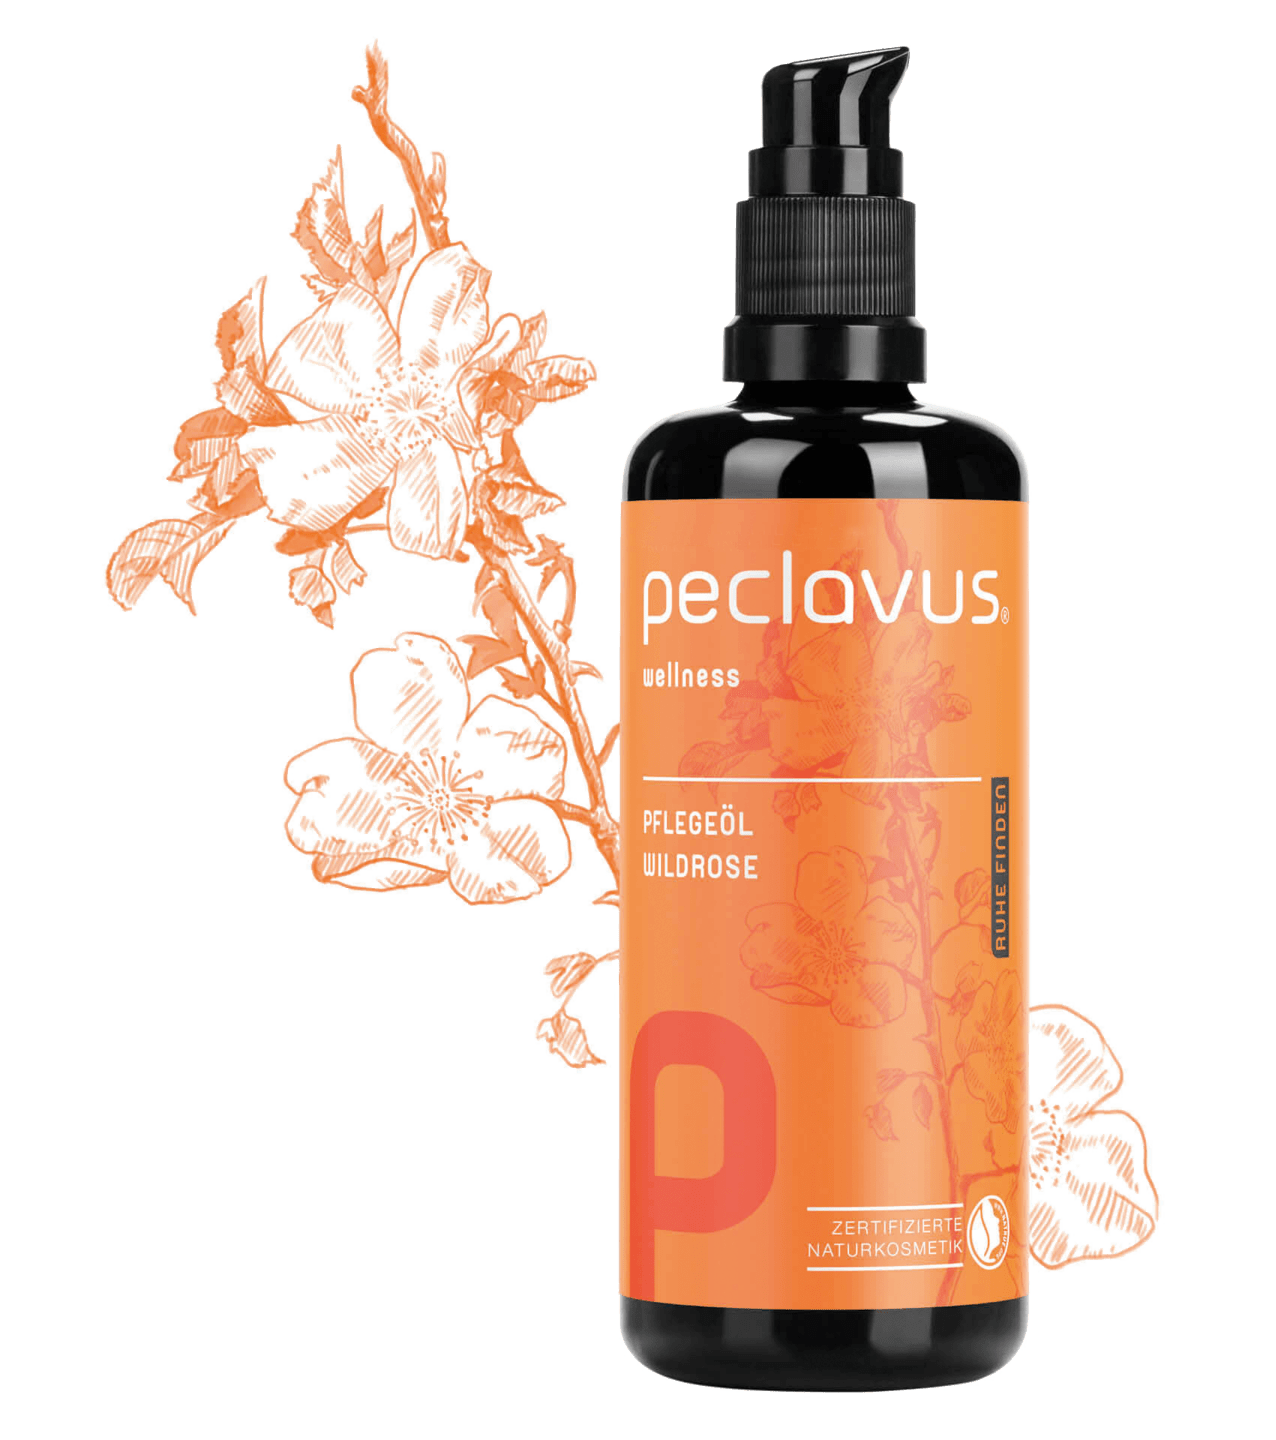 peclavus - Pflegeöl Wildrose, 100 ml